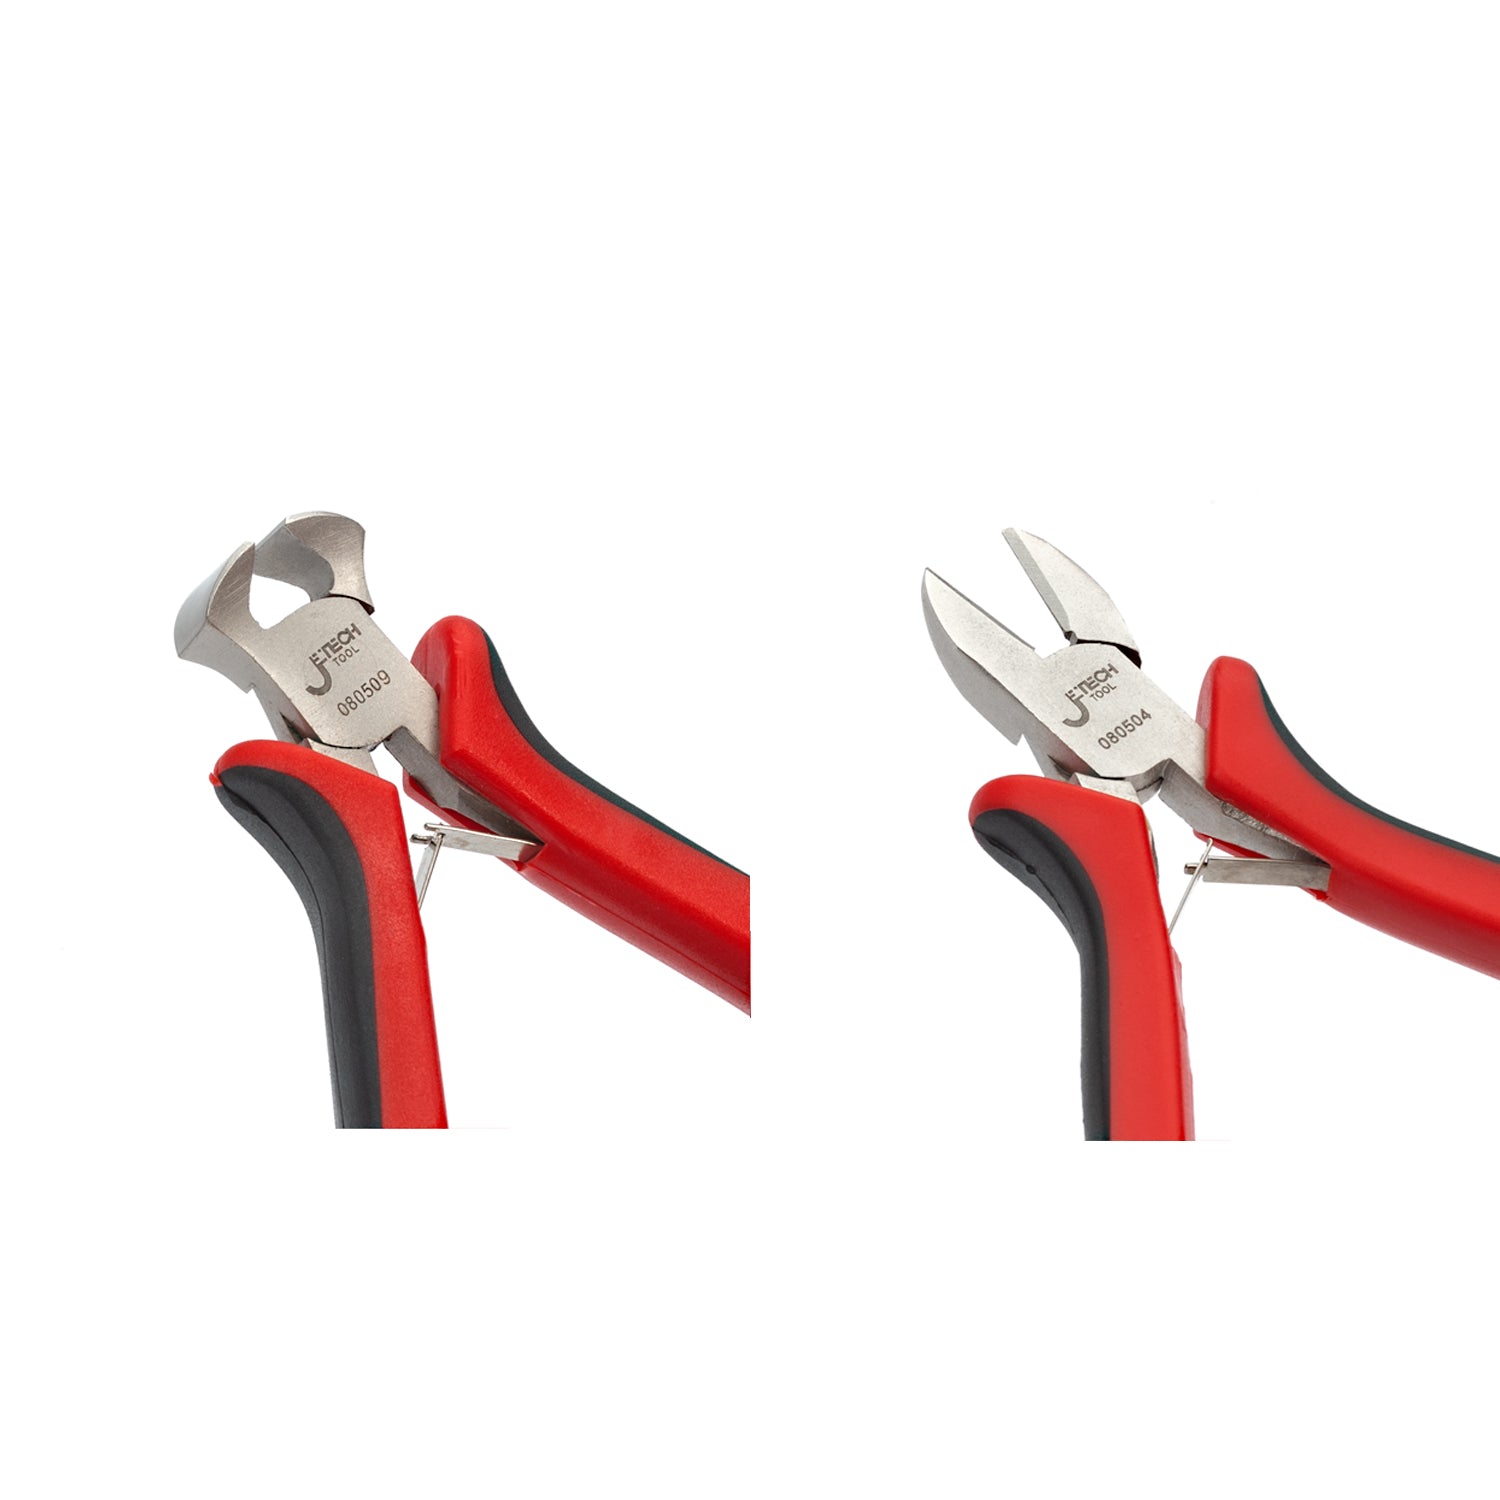 Jetech 6PCS Mini Pliers Set, Jewelry Pliers Tools – ToolsPlease